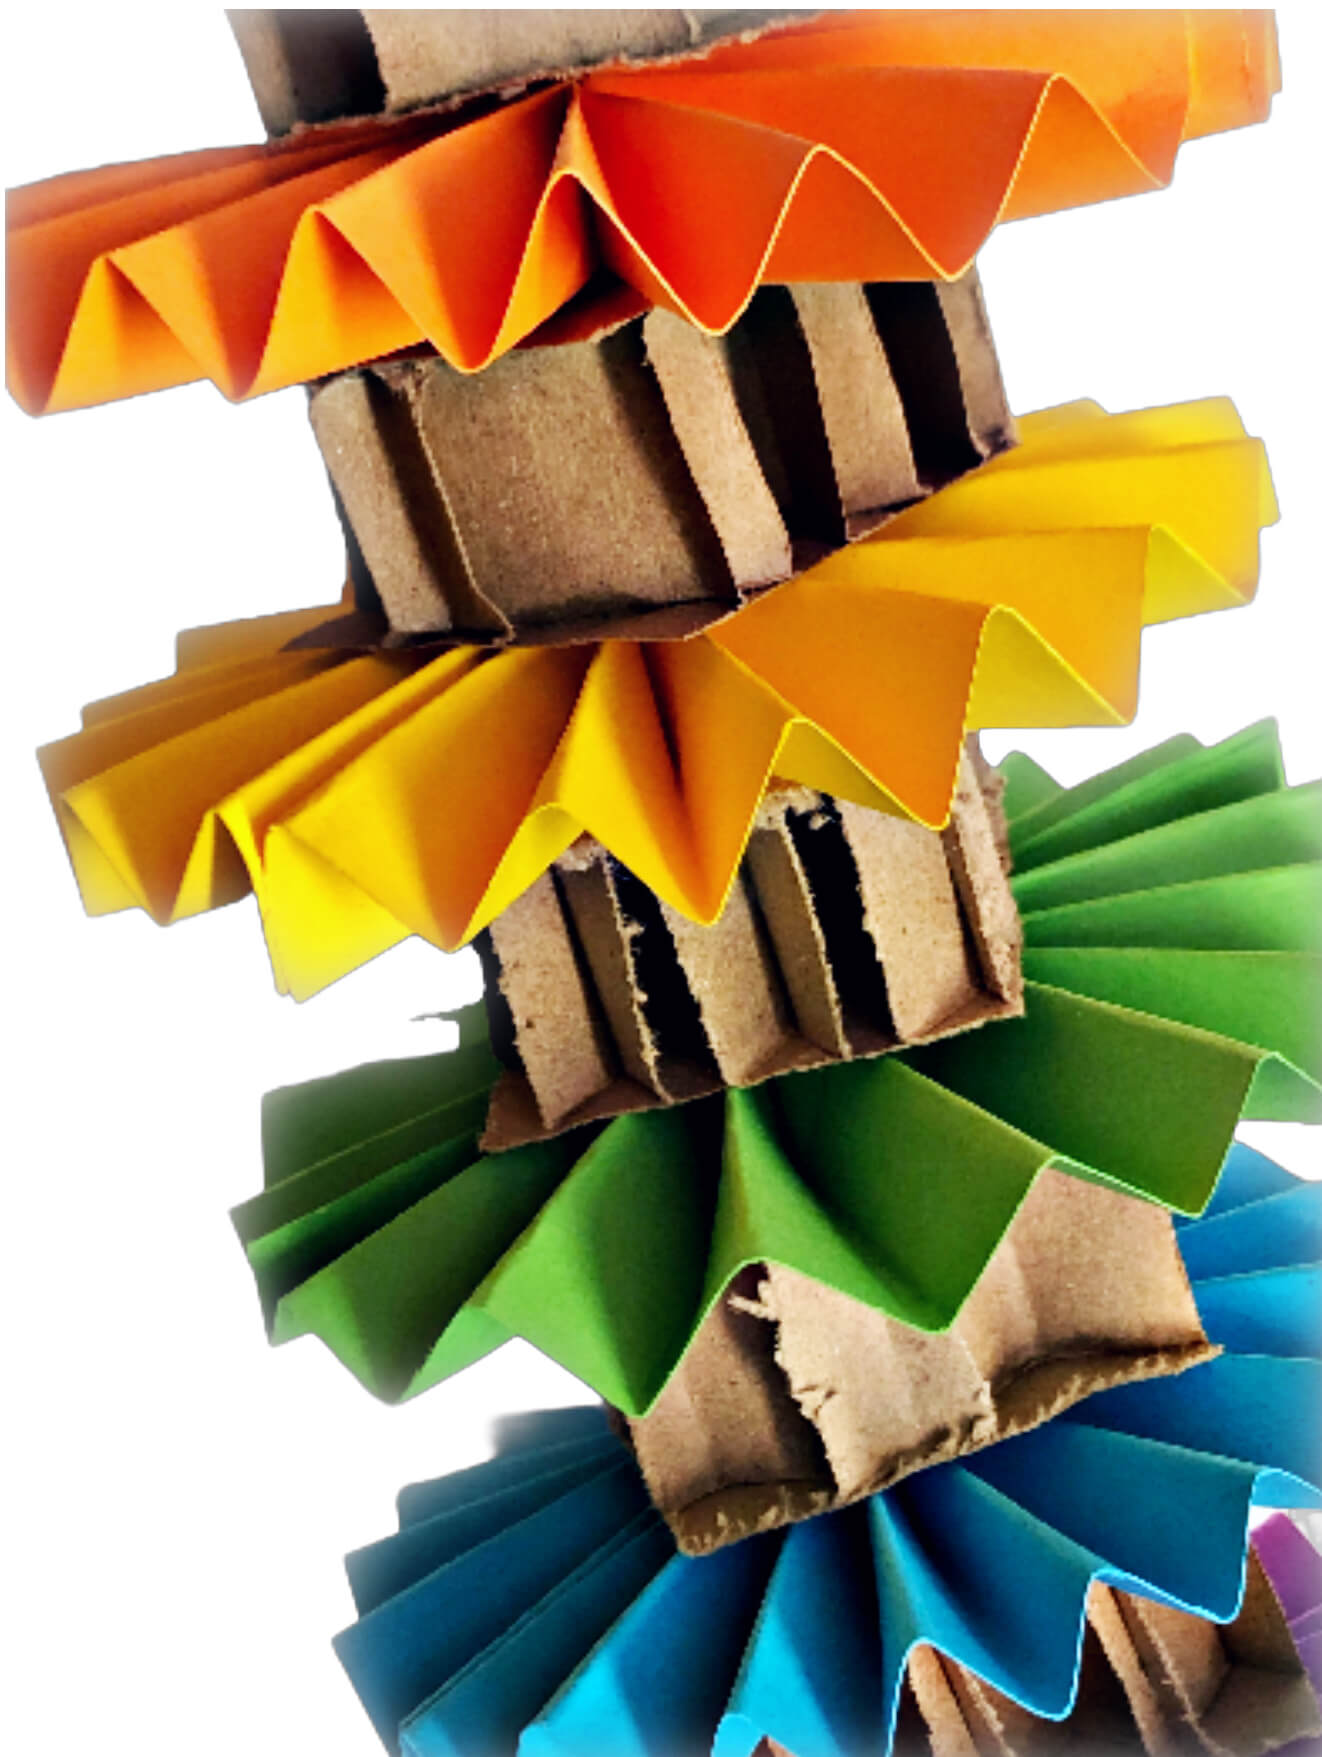 pinwheel with cardboard parrot toys